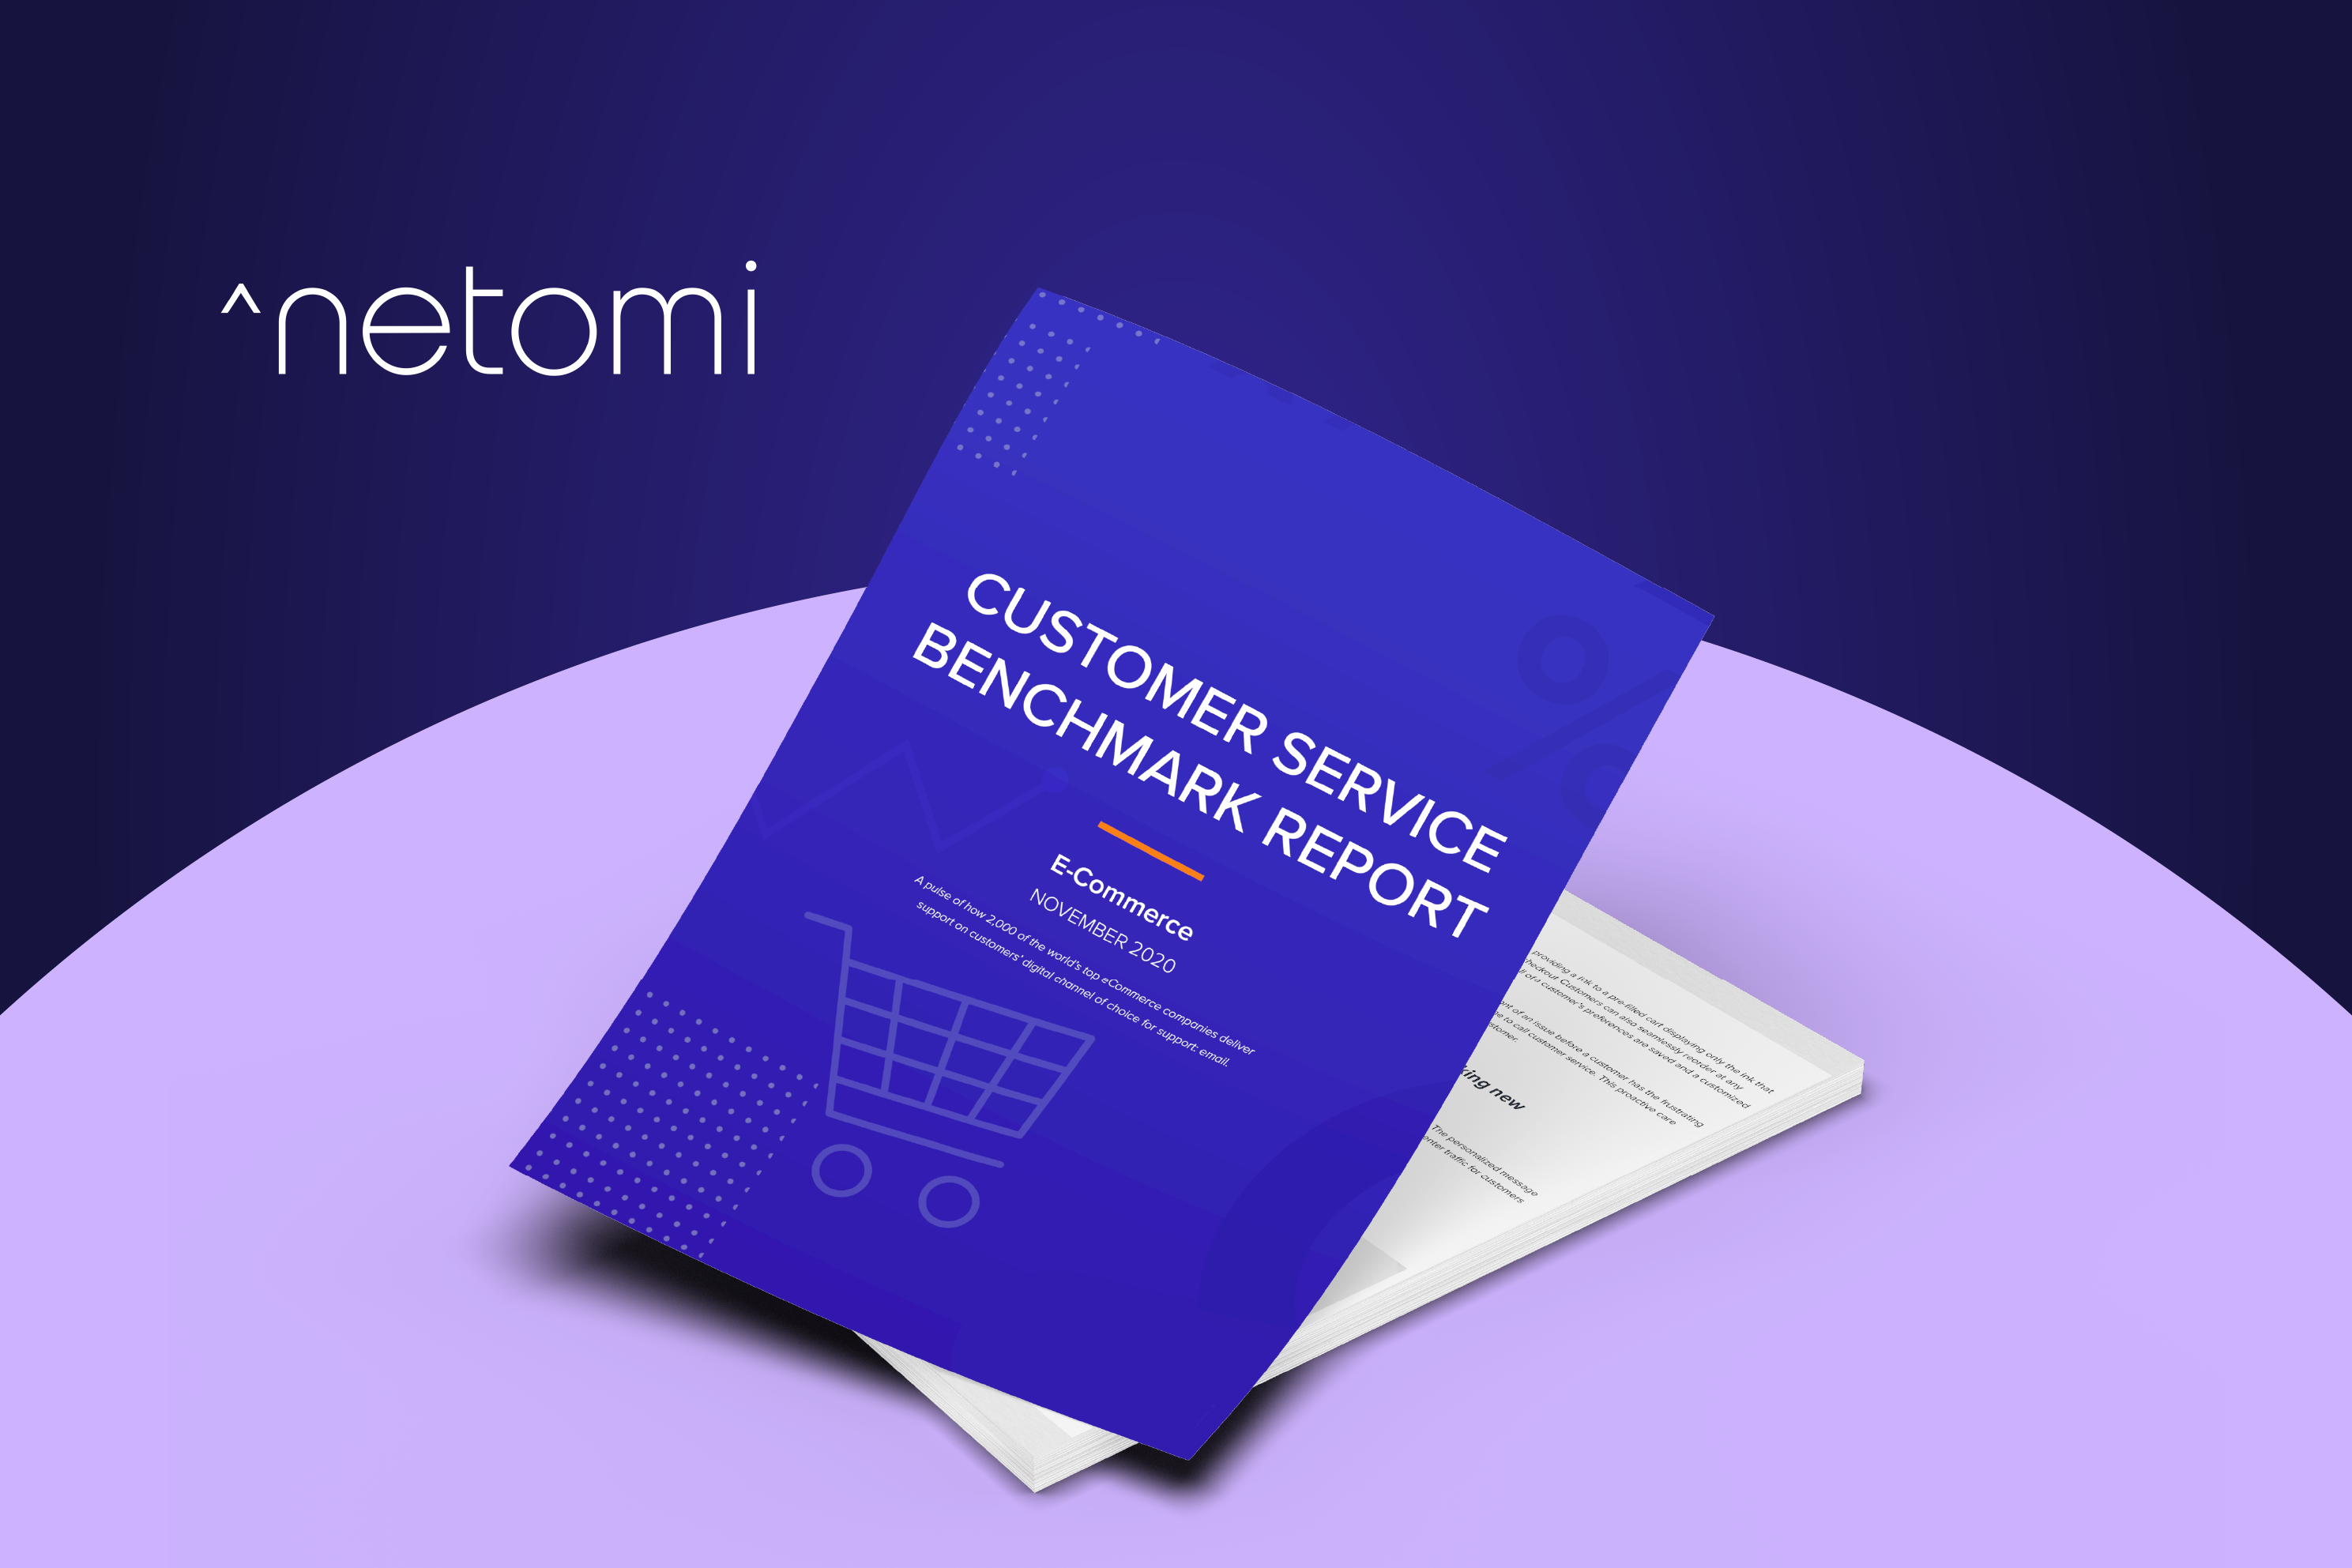 Customer Service Benchmark Report - eCommerce